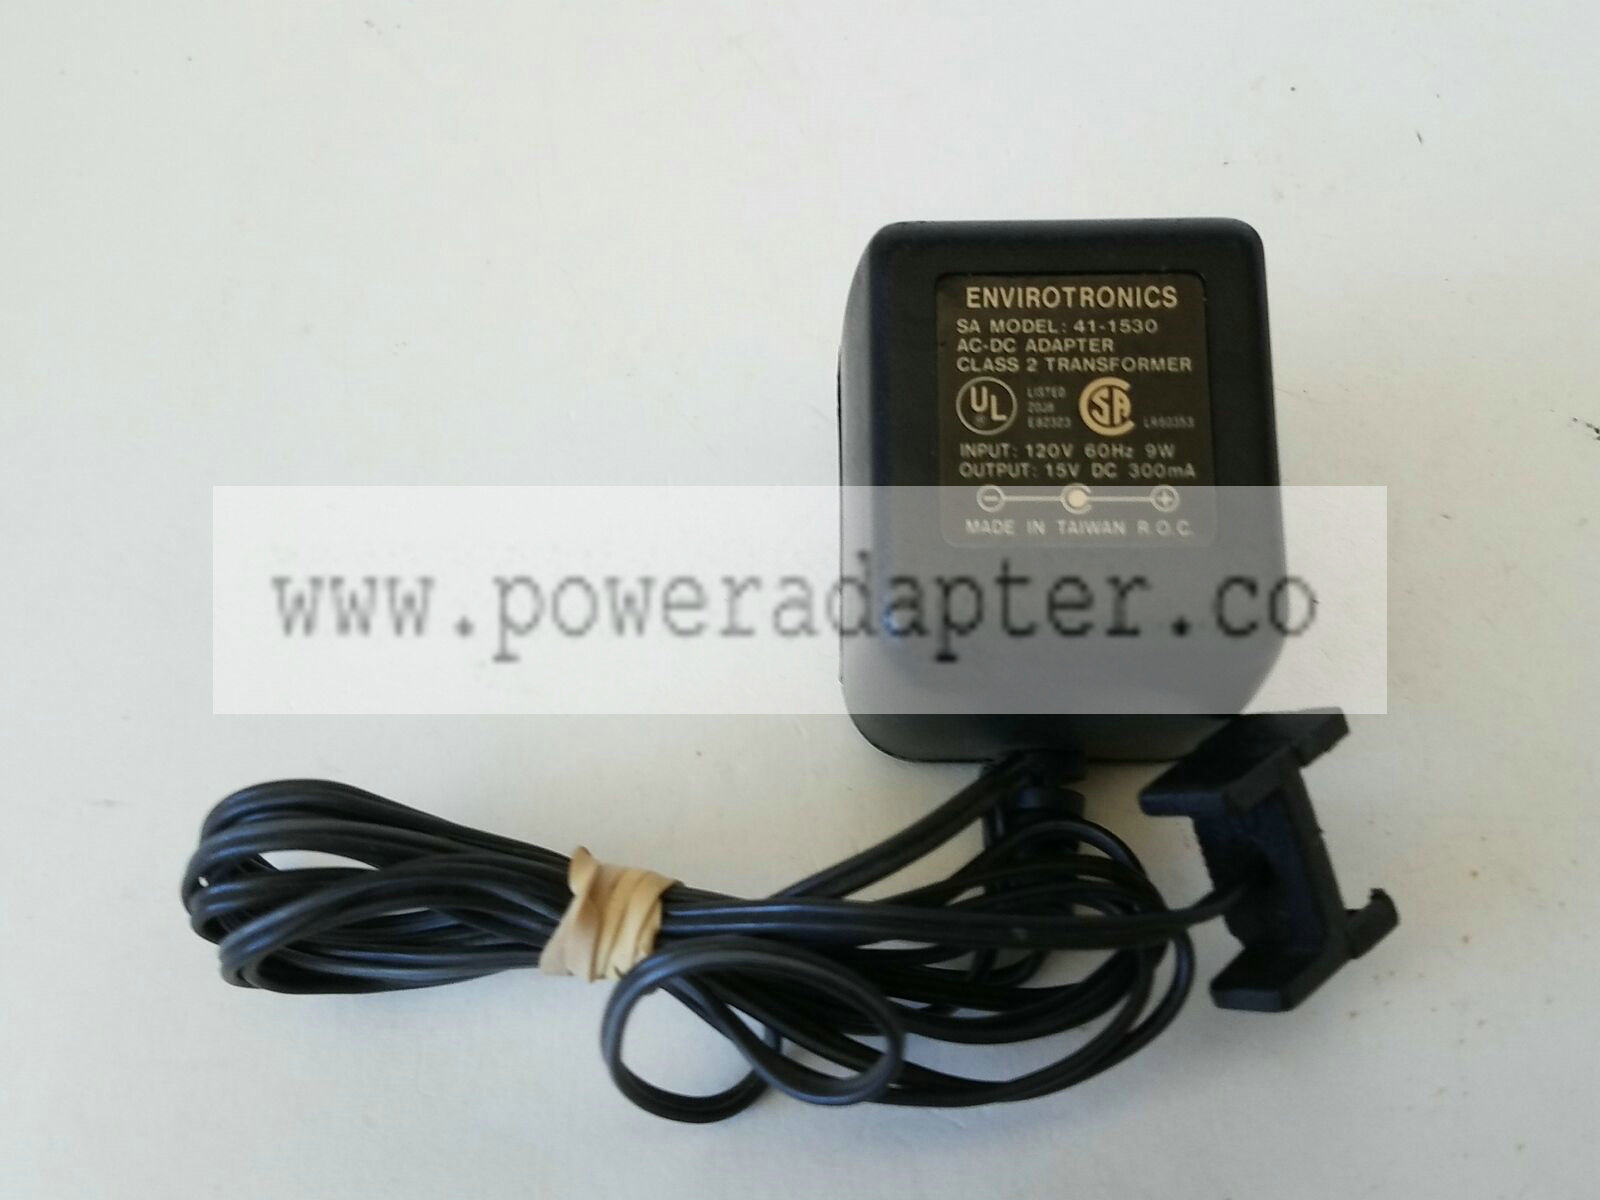 Envirotronics 41-1530 AC Adapter Power Supply 15VDC 300mA Brand: Envirotronics MPN: 41-1530 Model: 41-1530 Output